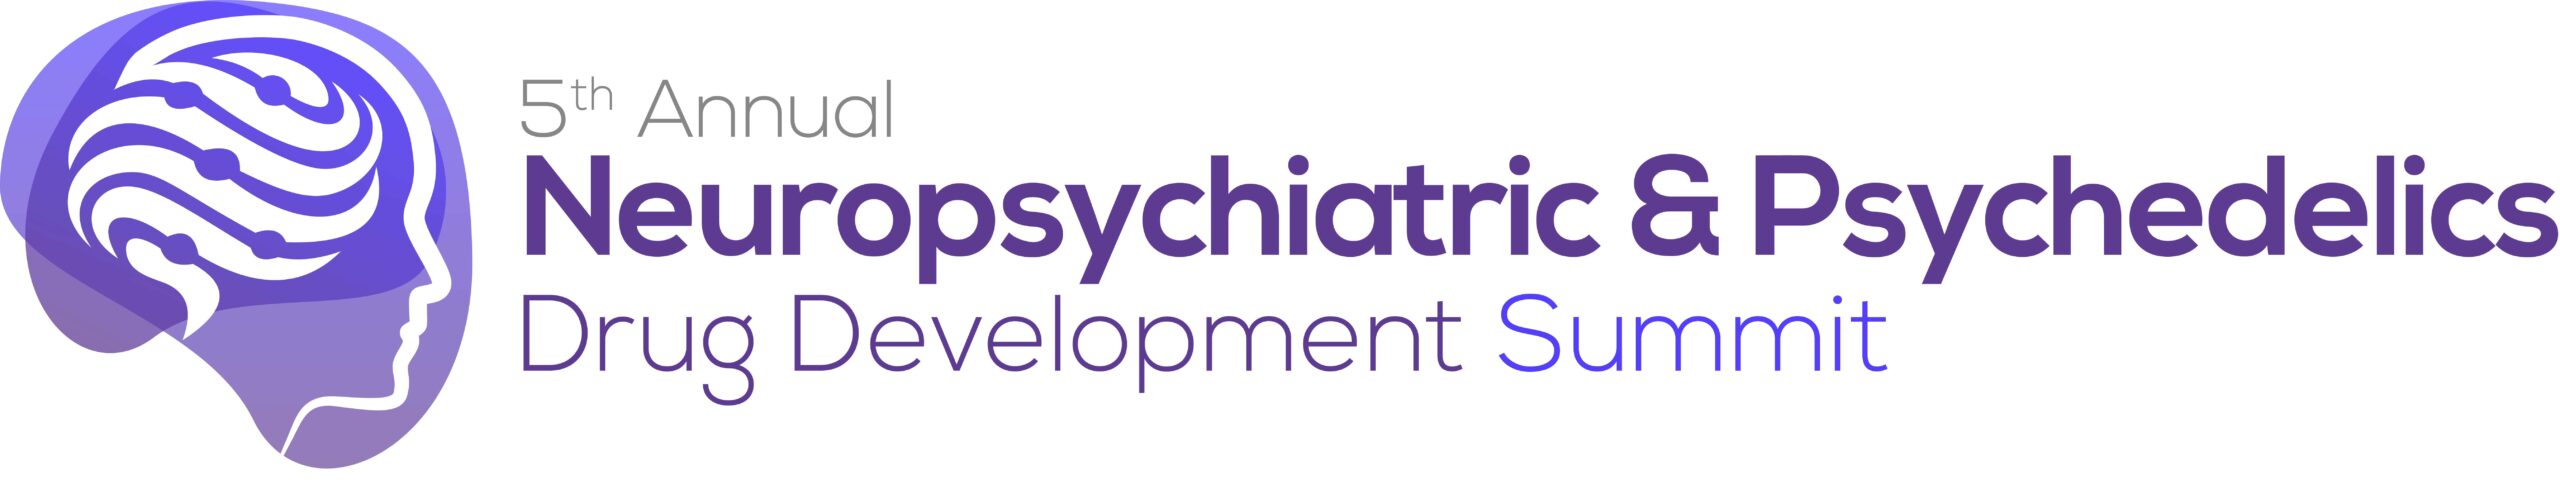 HW220704 5th Neuropsychiatric and Psychedelics Drug Development Summit logo FINAL-min